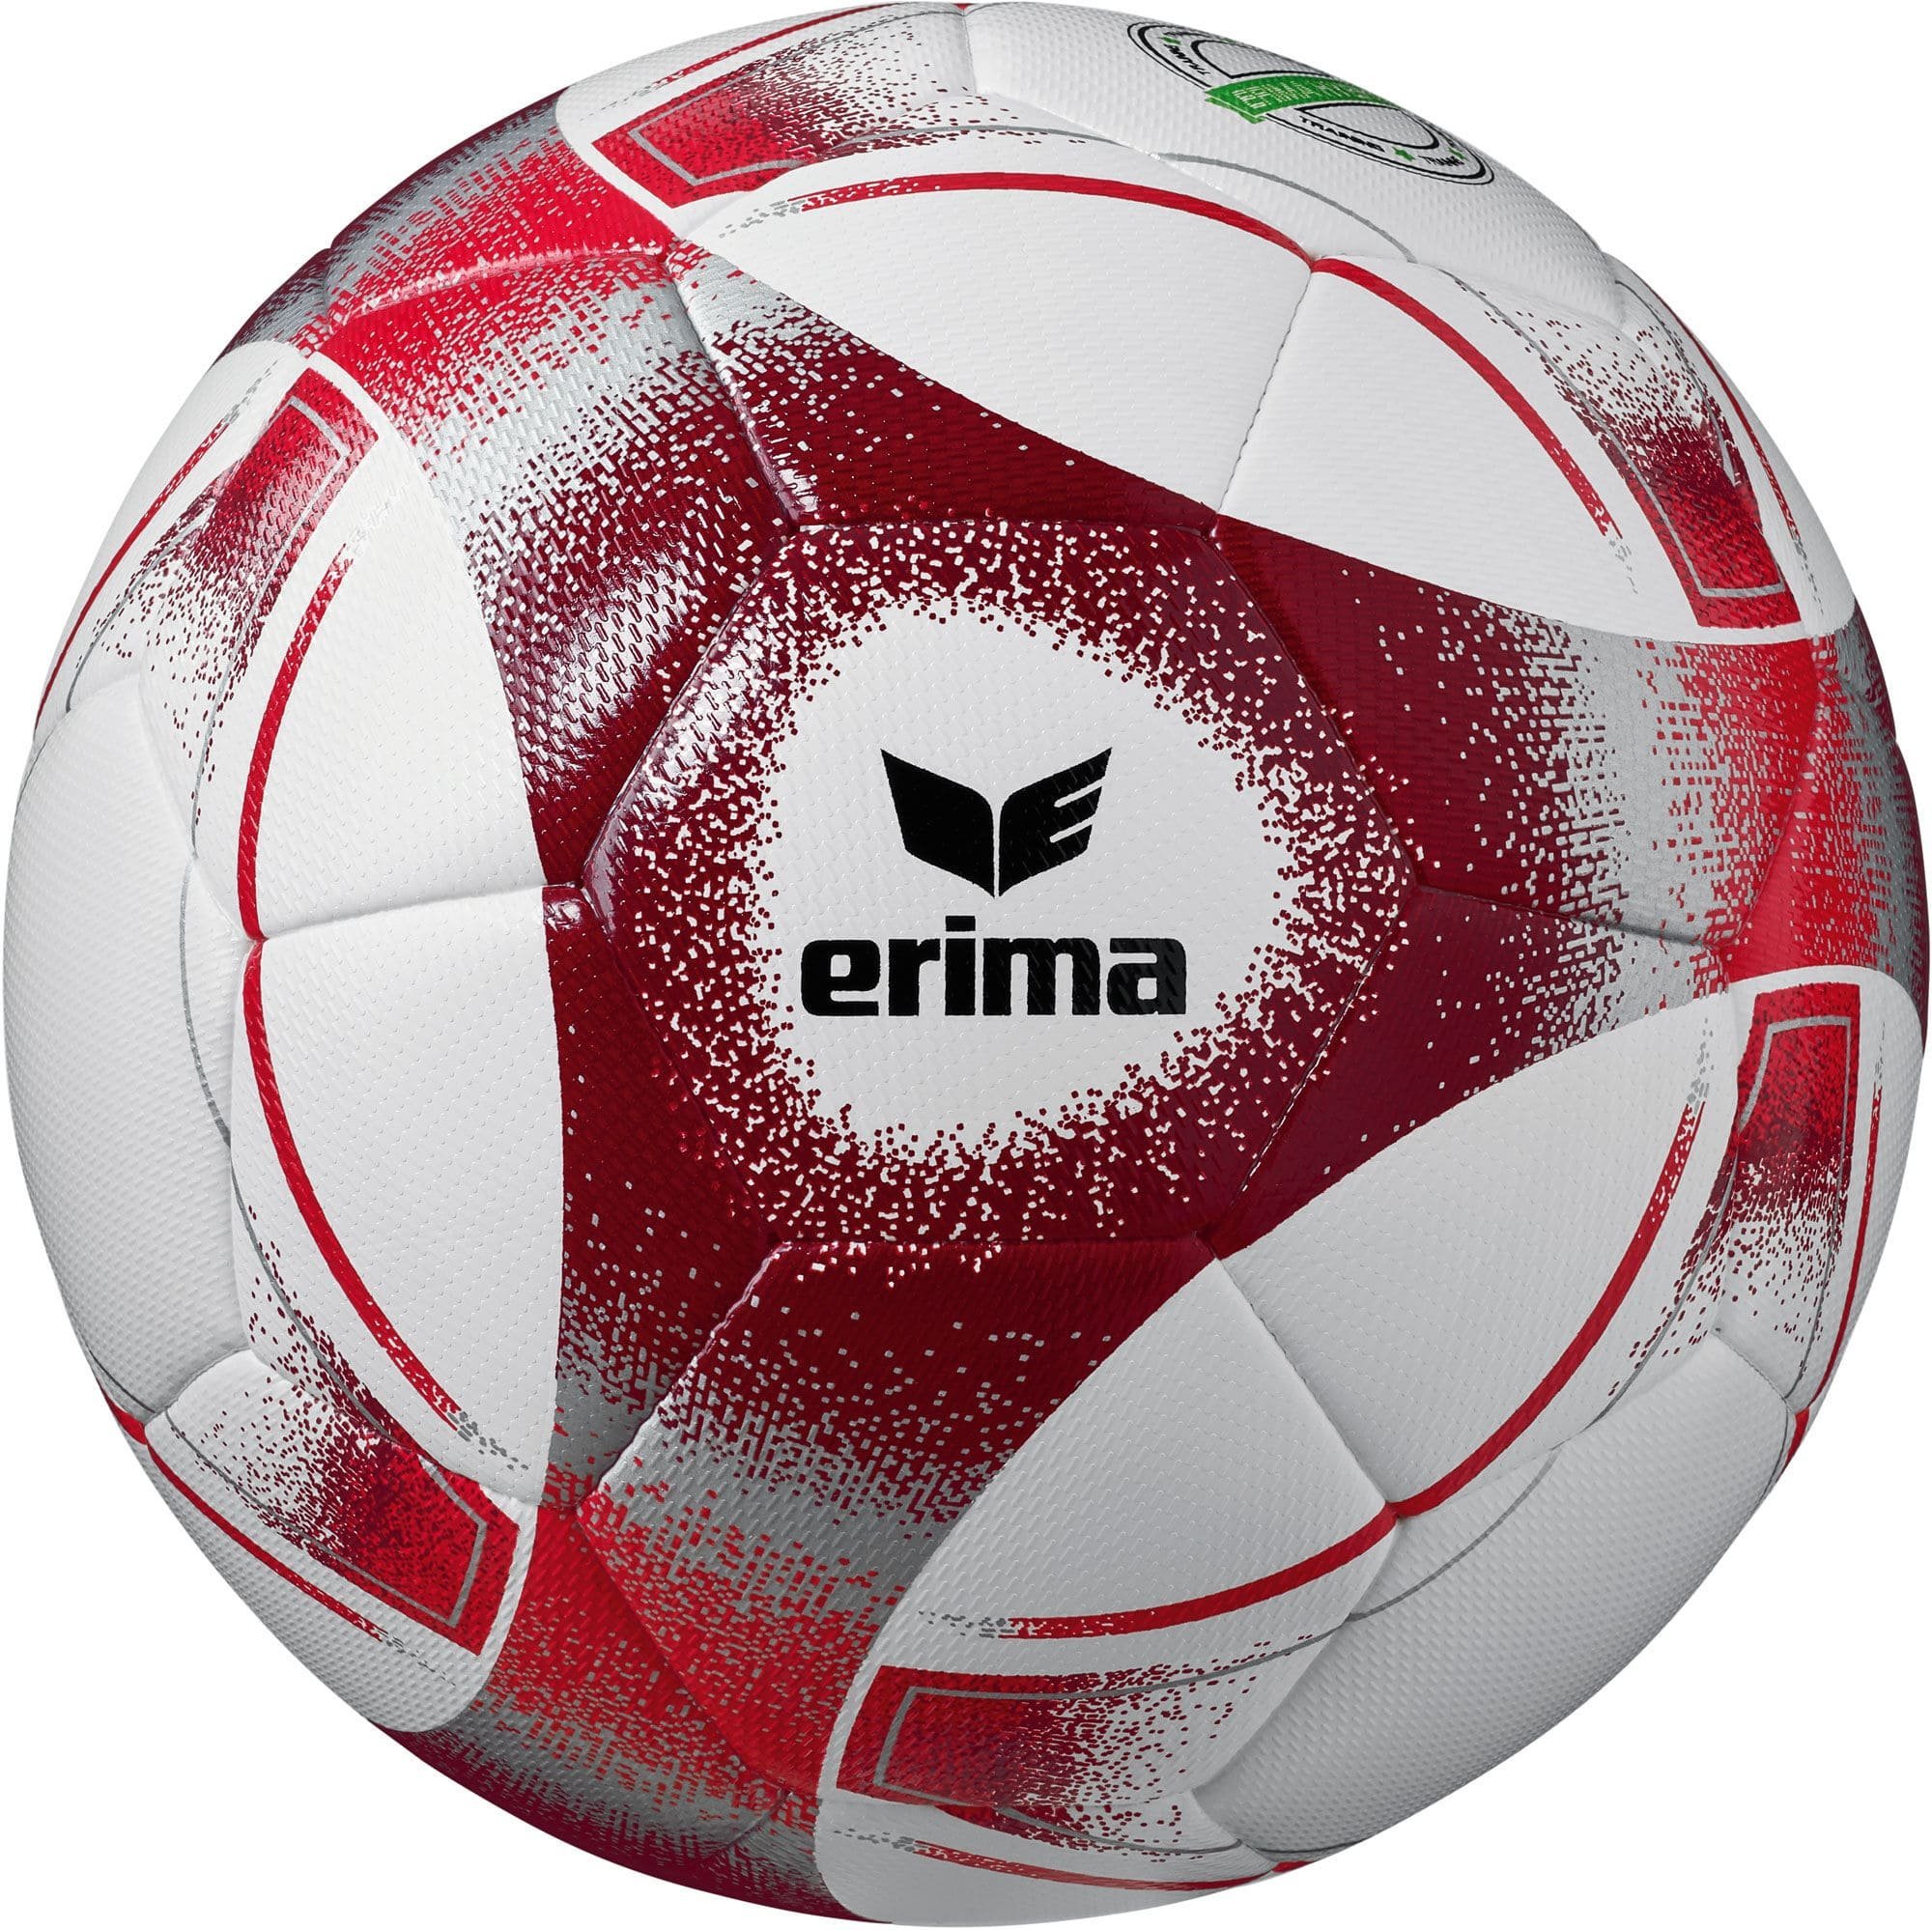 Erima Hybrid Training 2.0 Soccer